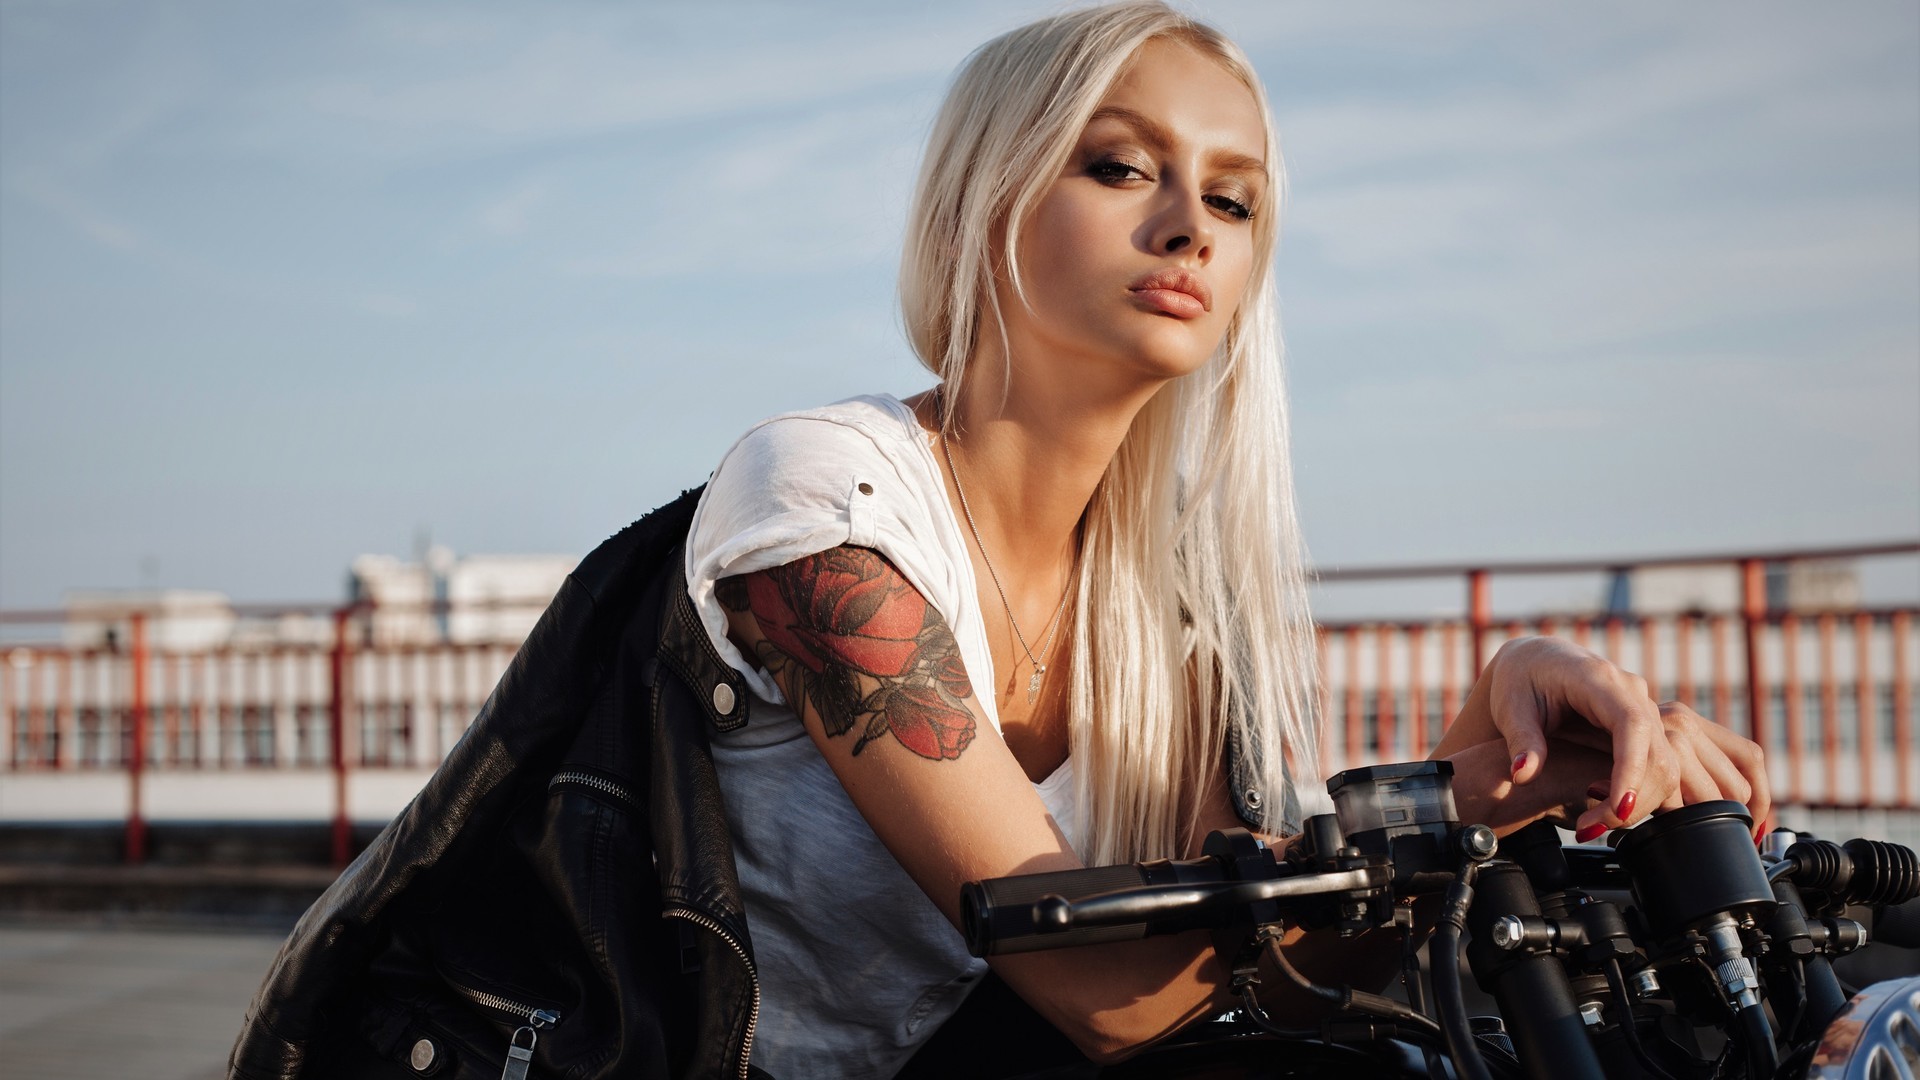 1920x1080 tattoo-girl-on-motorcycle-5k-ud.jpg